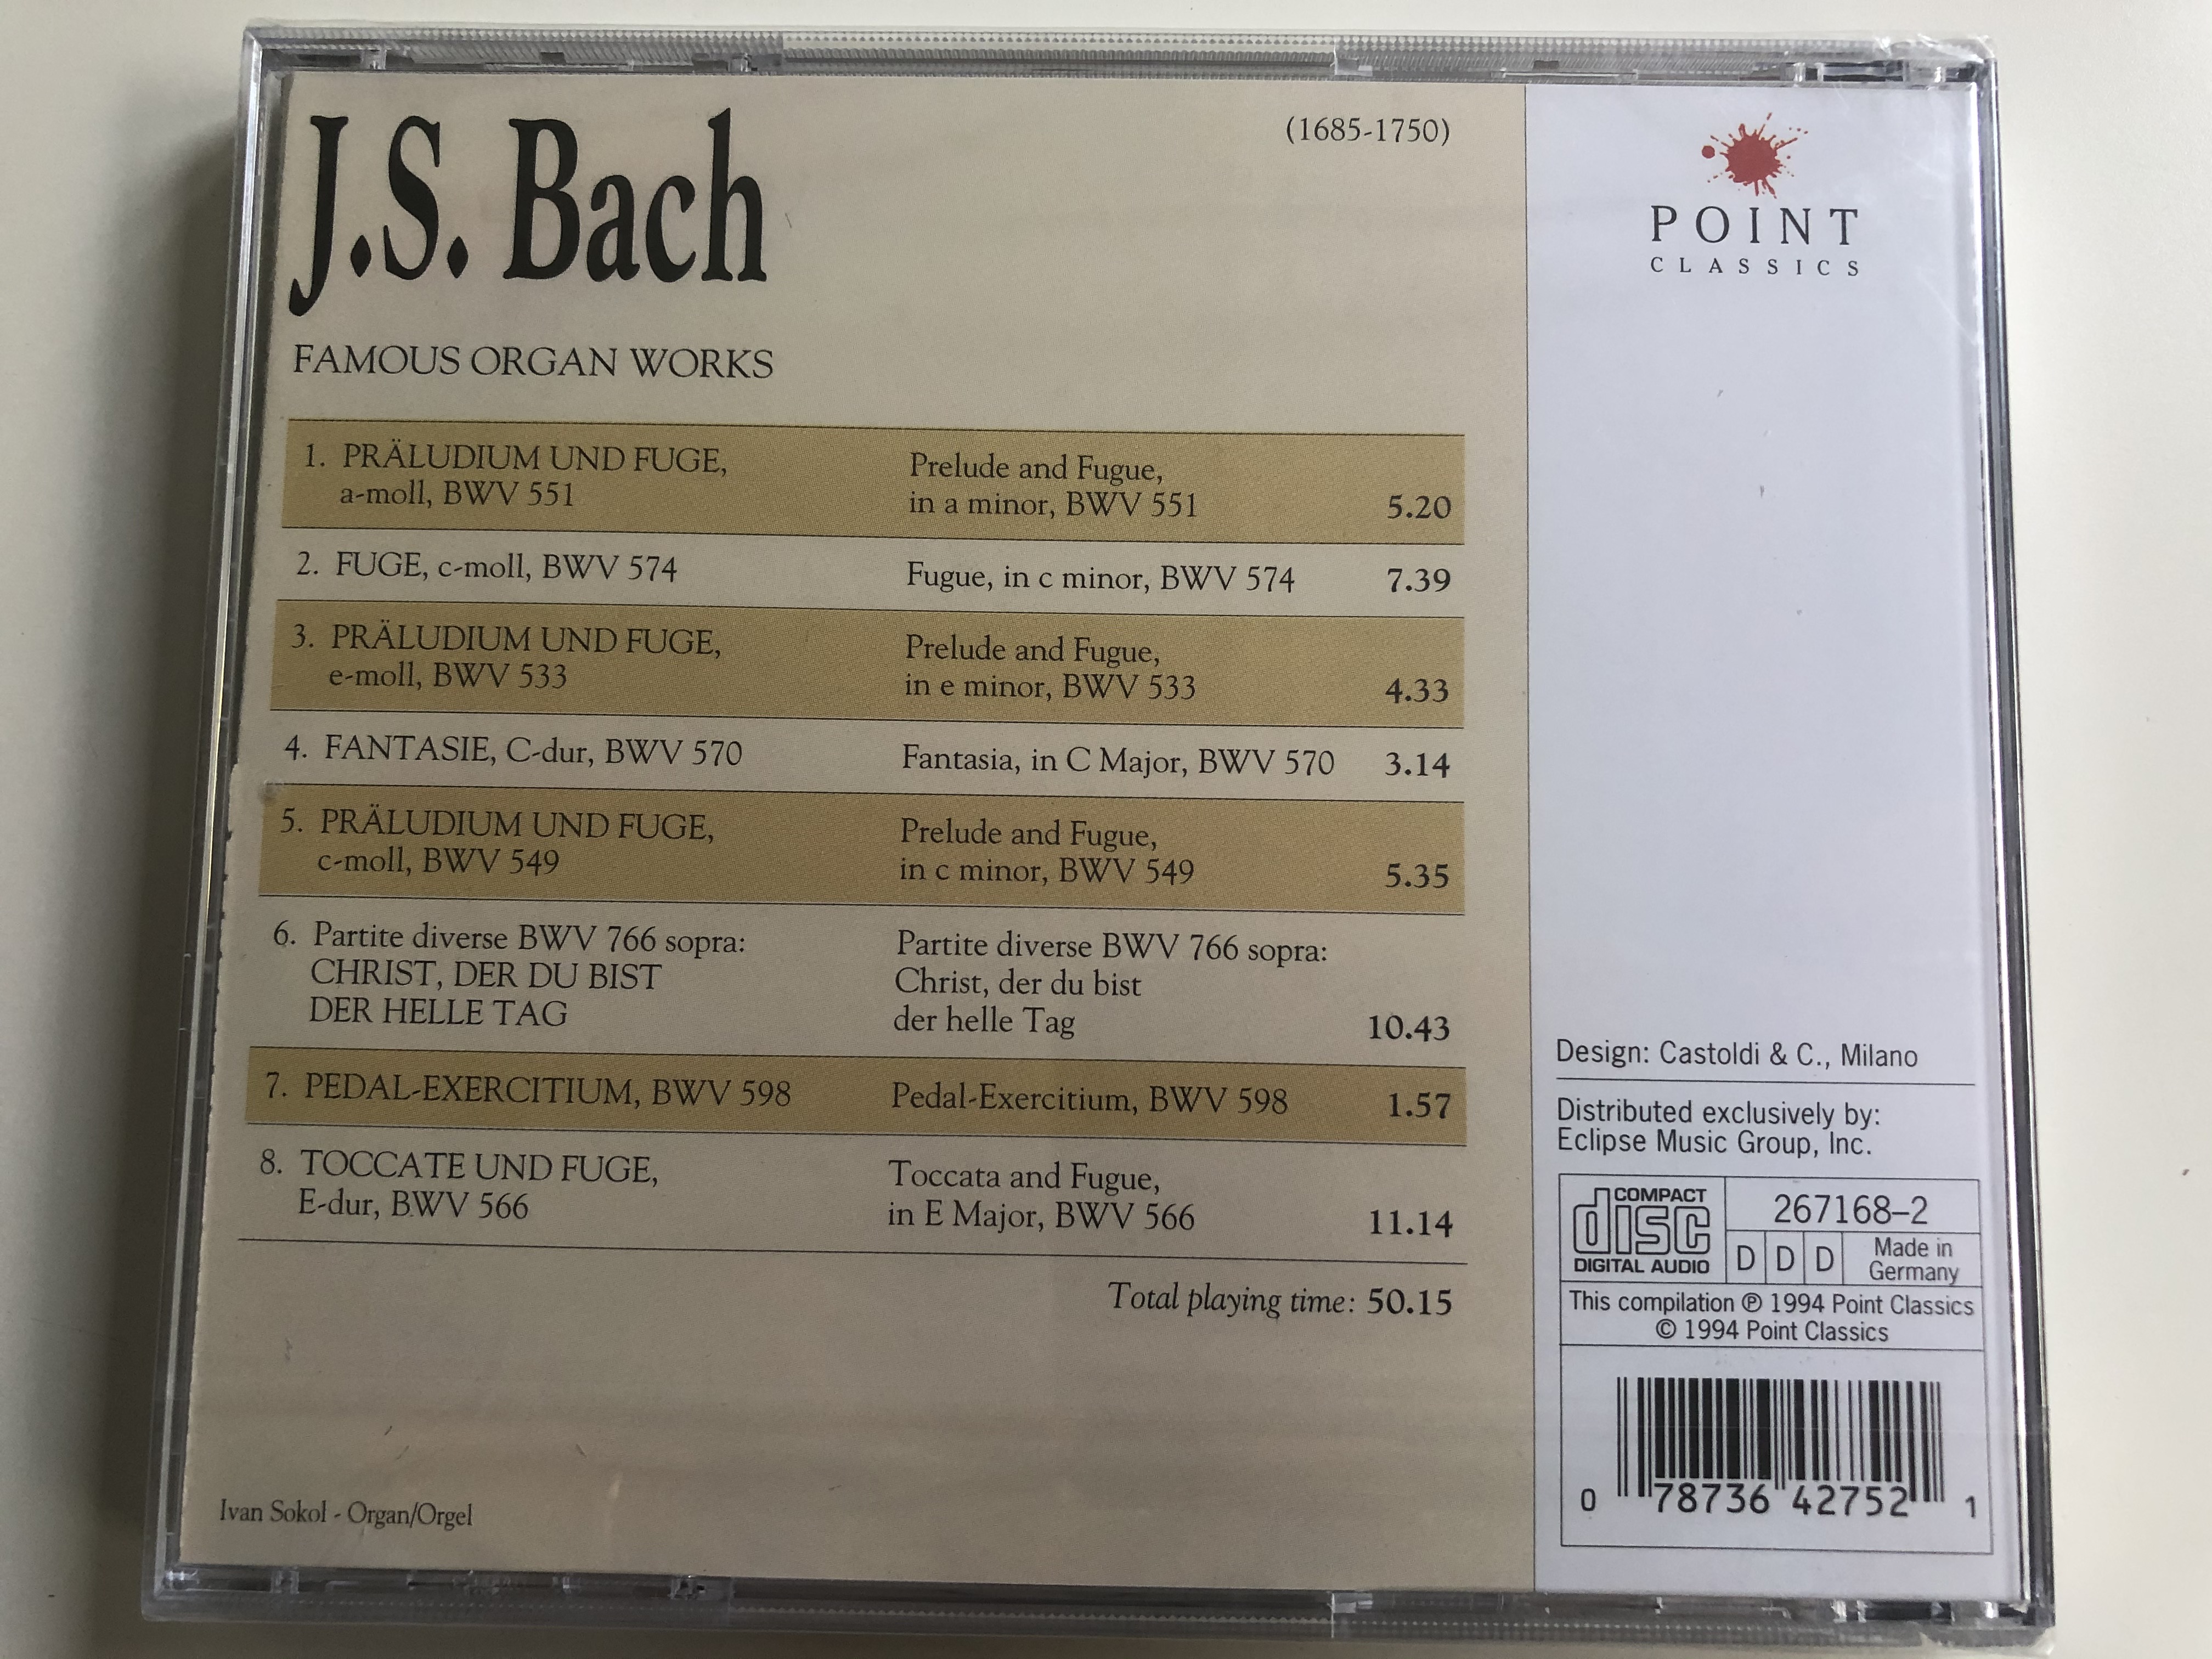 bach-famous-organ-works-ivan-sokol-organ-point-classics-audio-cd-1994-267168-2-2-.jpg